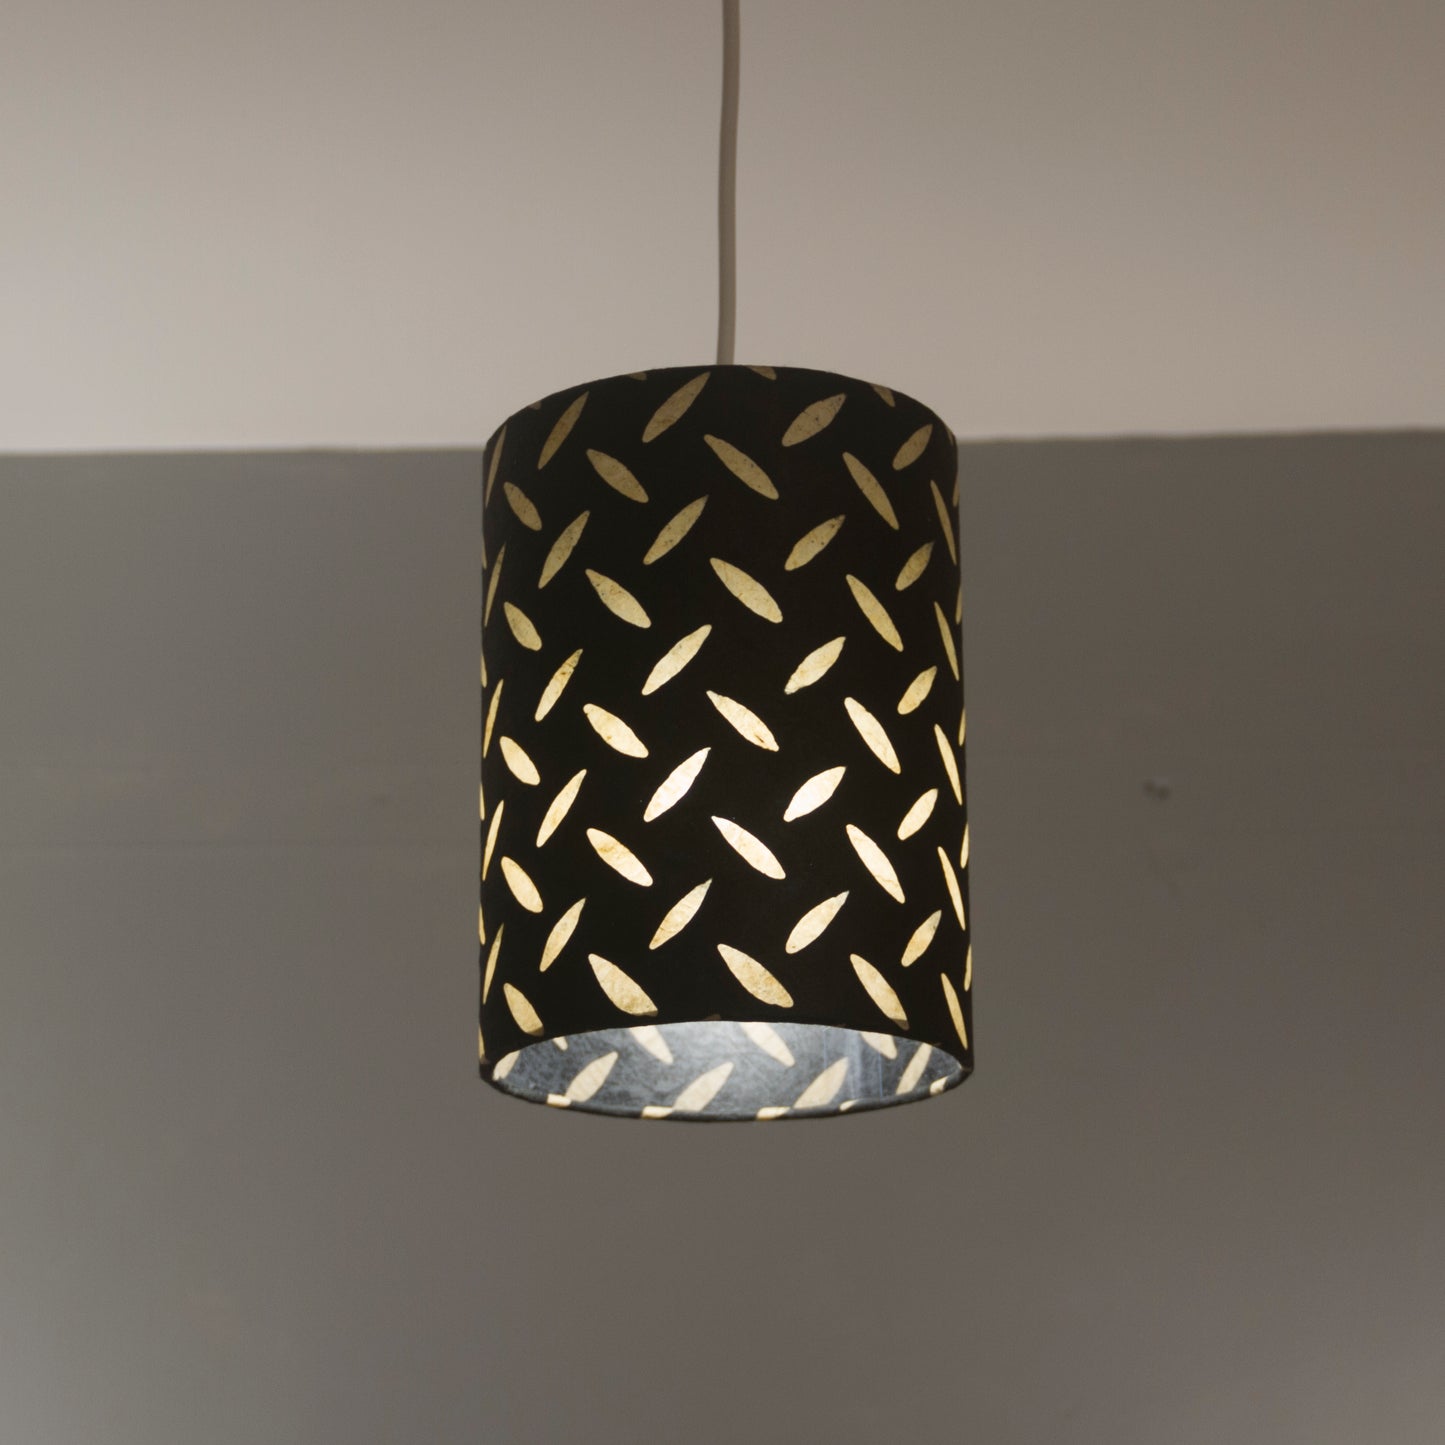 Oval Lamp Shade - P11 - Batik Tread Plate Black, 40cm(w) x 20cm(h) x 30cm(d)